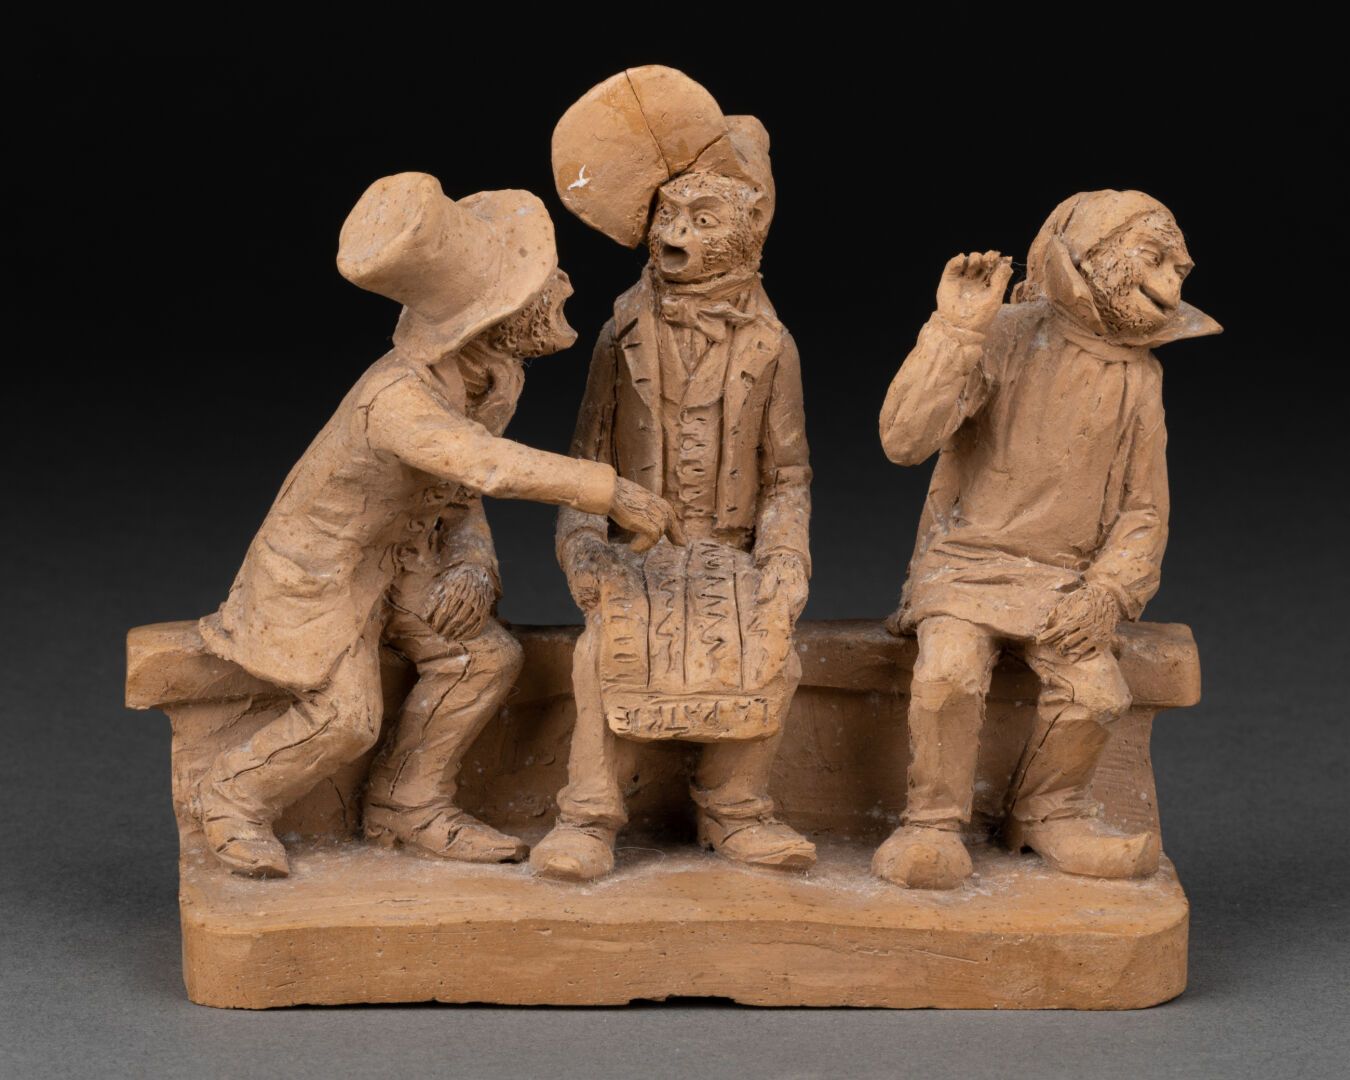 L. DEBORDE 三只猴子在长椅上的讨论

浇铸、刻画和抛光的粘土

背面的签名

H.10 cm - W. 11 cm - D. 4.5 cm